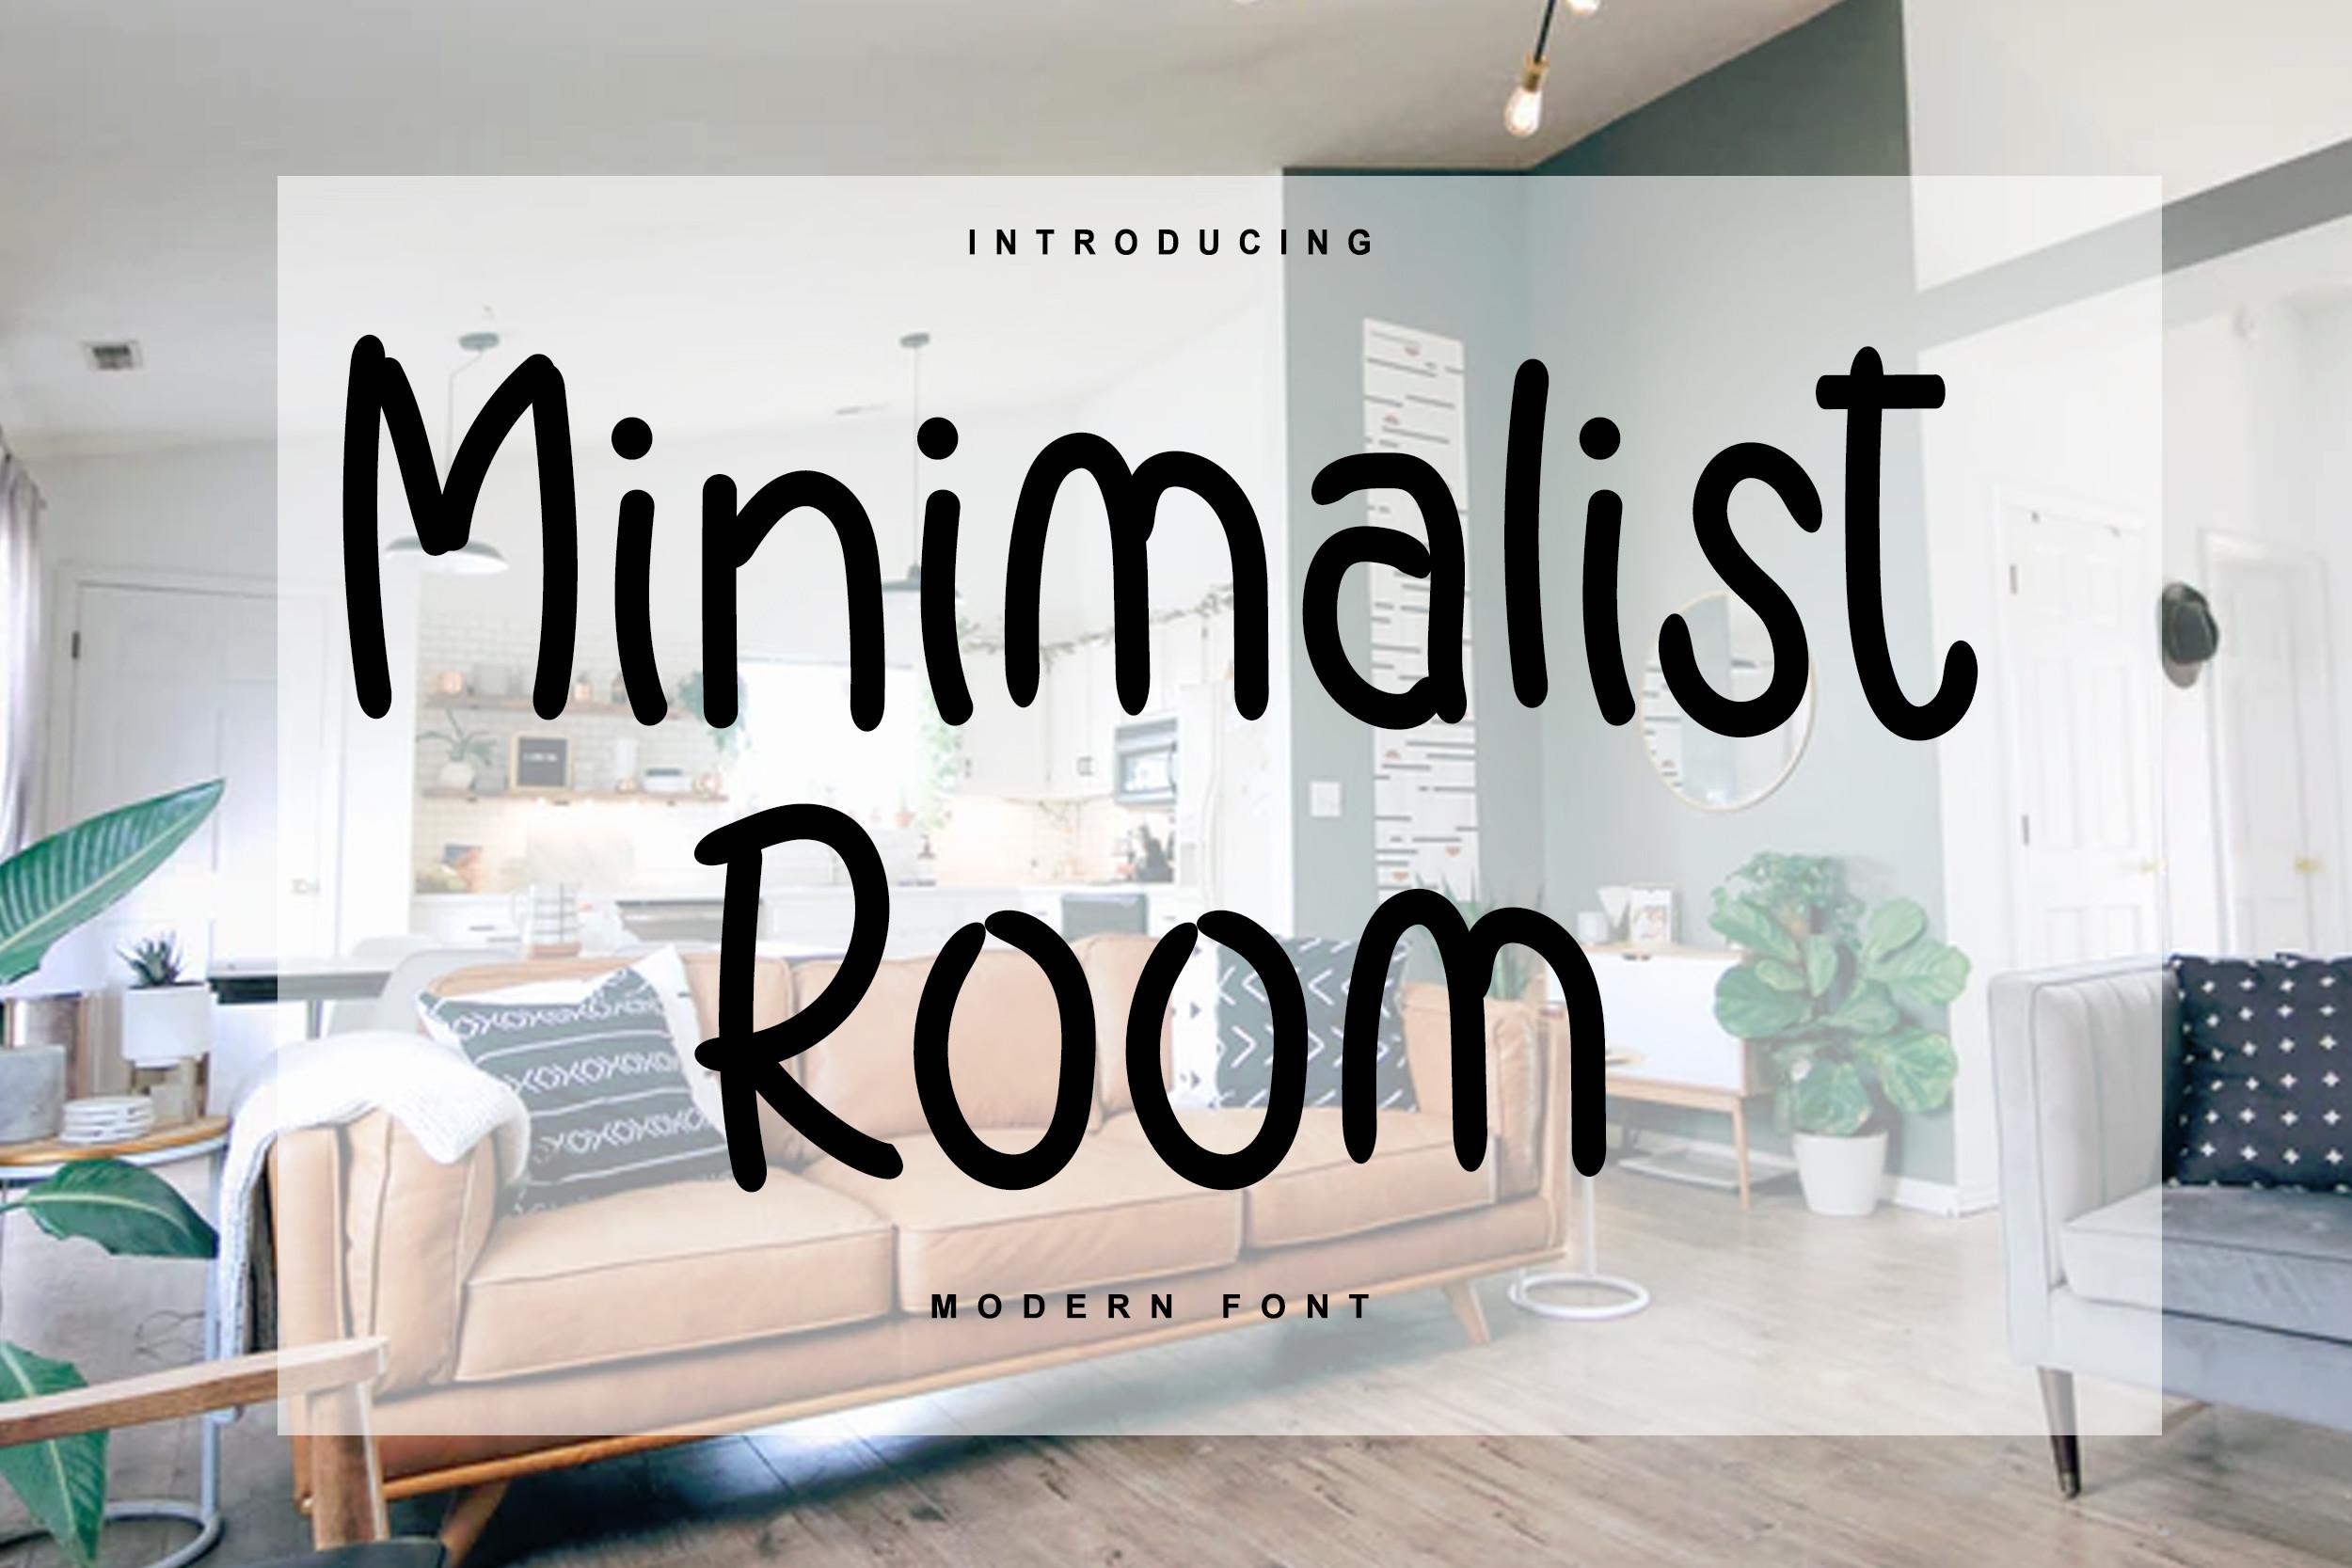 Minimalist Room Font